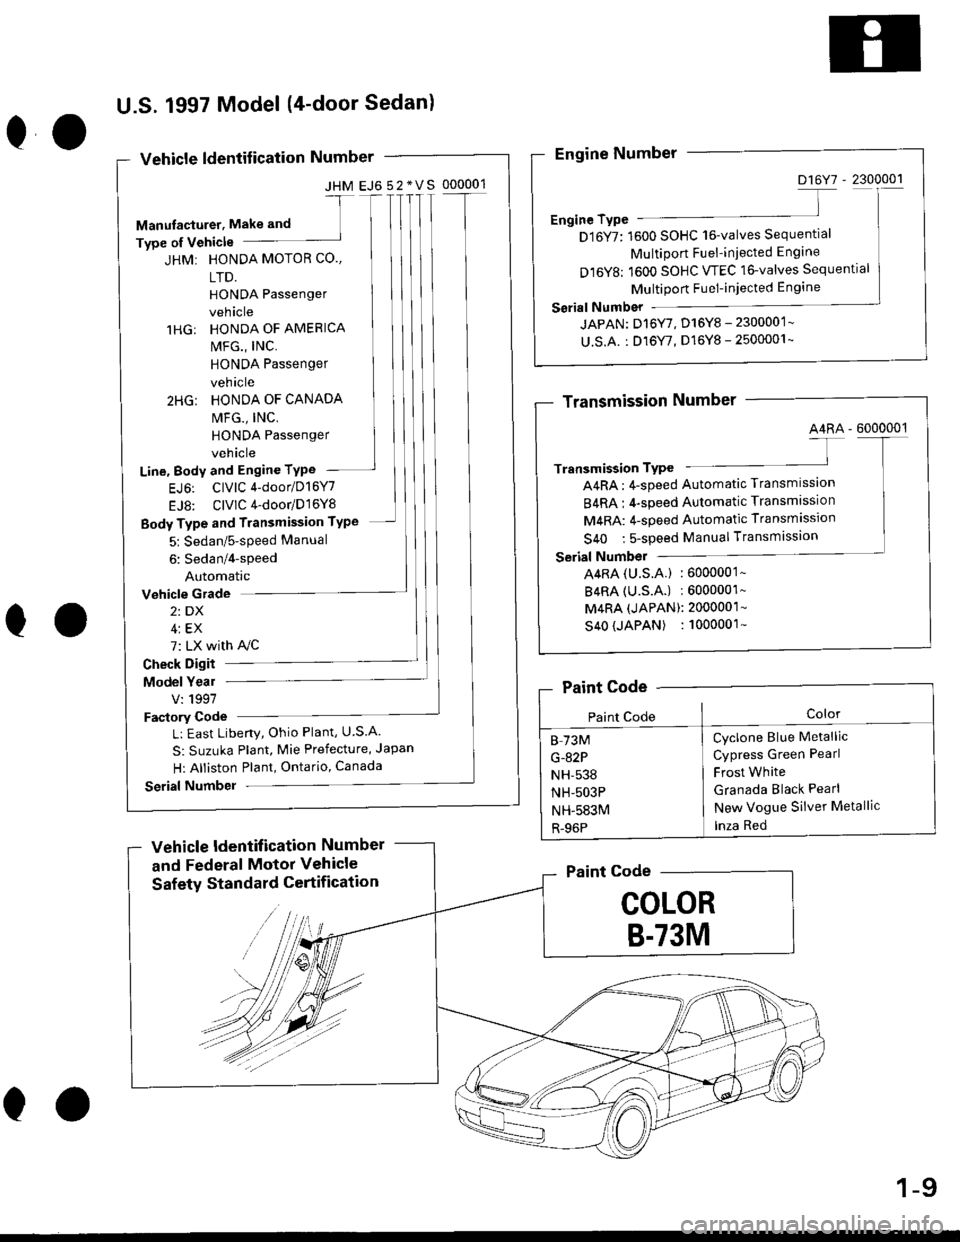 HONDA CIVIC 1996 6.G User Guide 00
U.S. 1997 Model (4-door Sedanl
Vehicle ldentif ication Number
JHM EJ6 52*VS 000001
Manulaqturer. Make and 
-t
Type of Vehicle
HONDA MOTOR CO.,
LTD.
HONDA Passenger
vehicle
HONDA OF AMERICA
MFG., IN